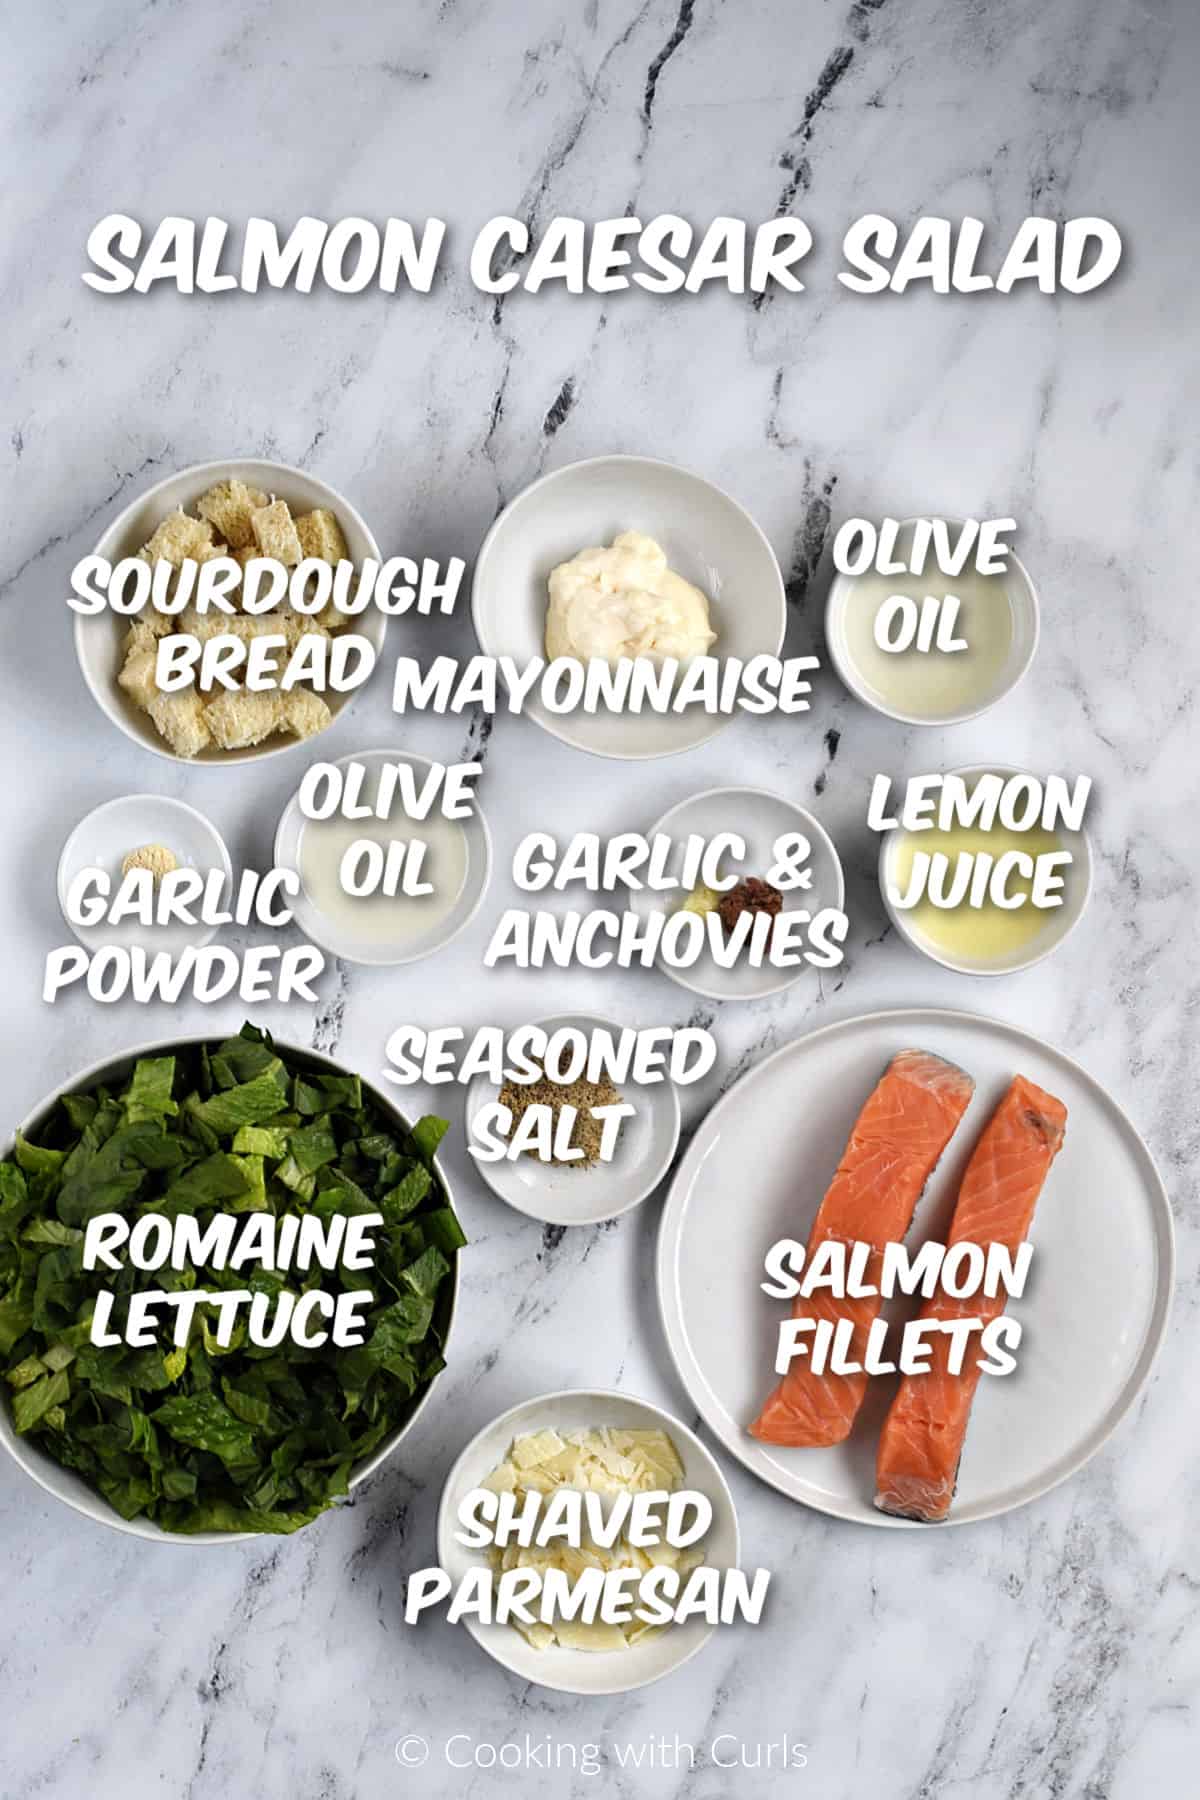 Salmon Caesar Salad ingredients. 